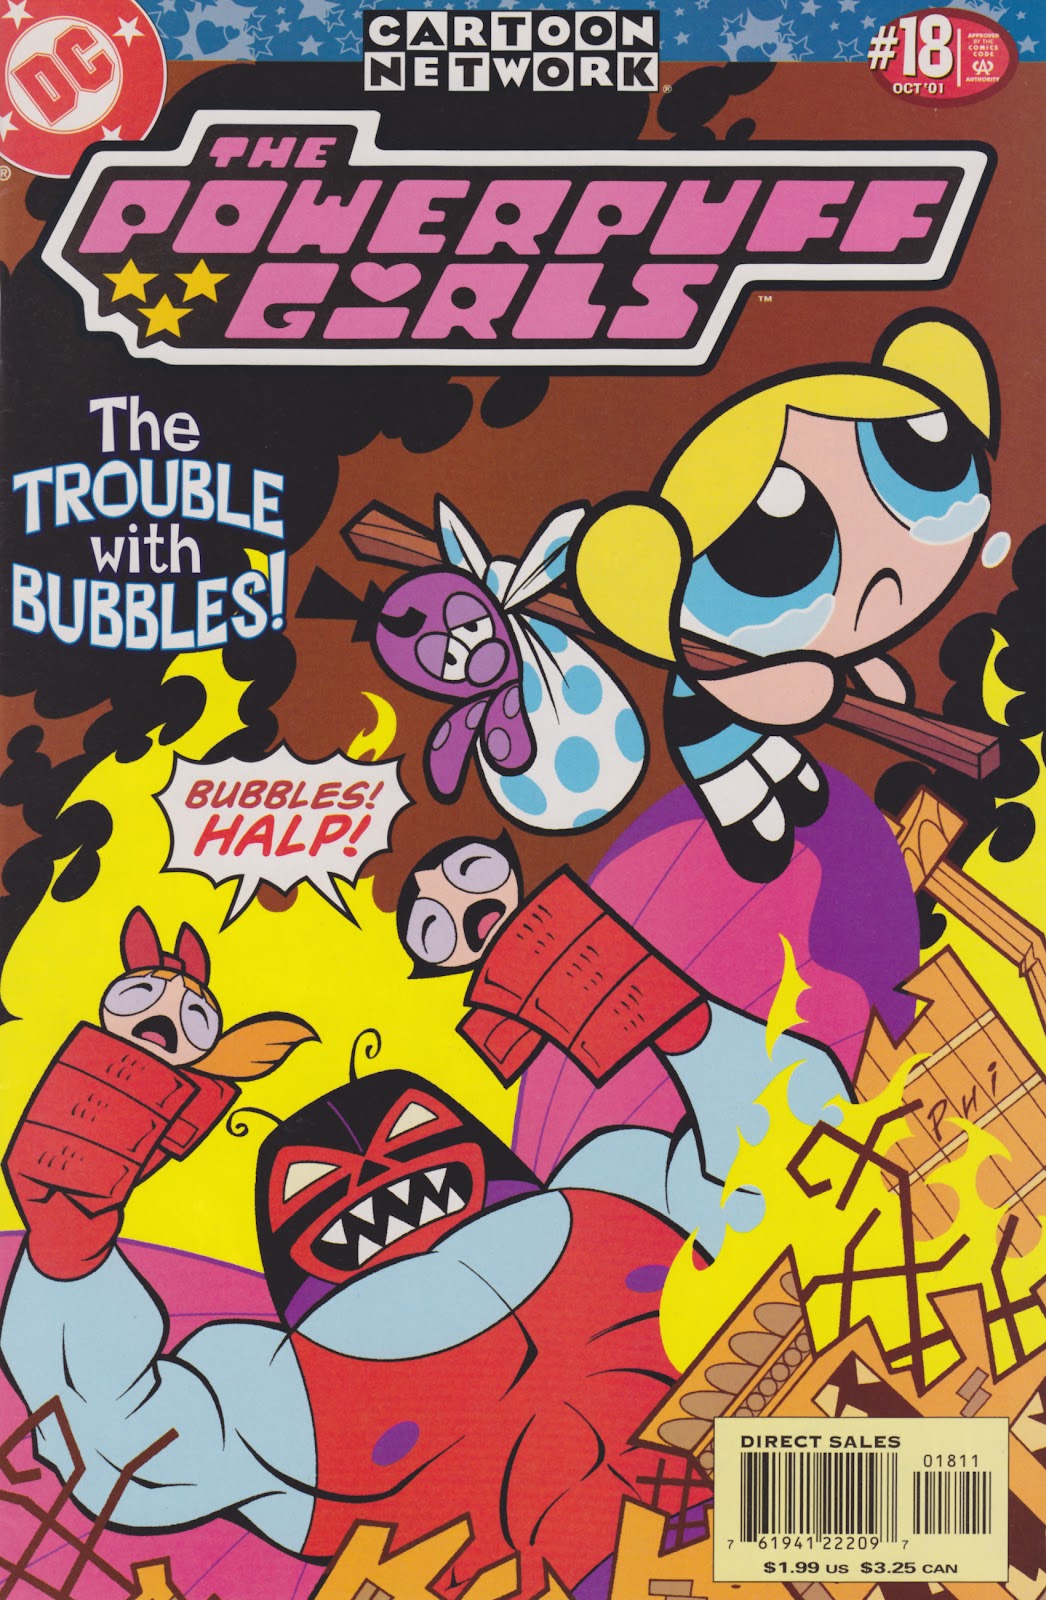 Read Online The Powerpuff Girls Comic Issue